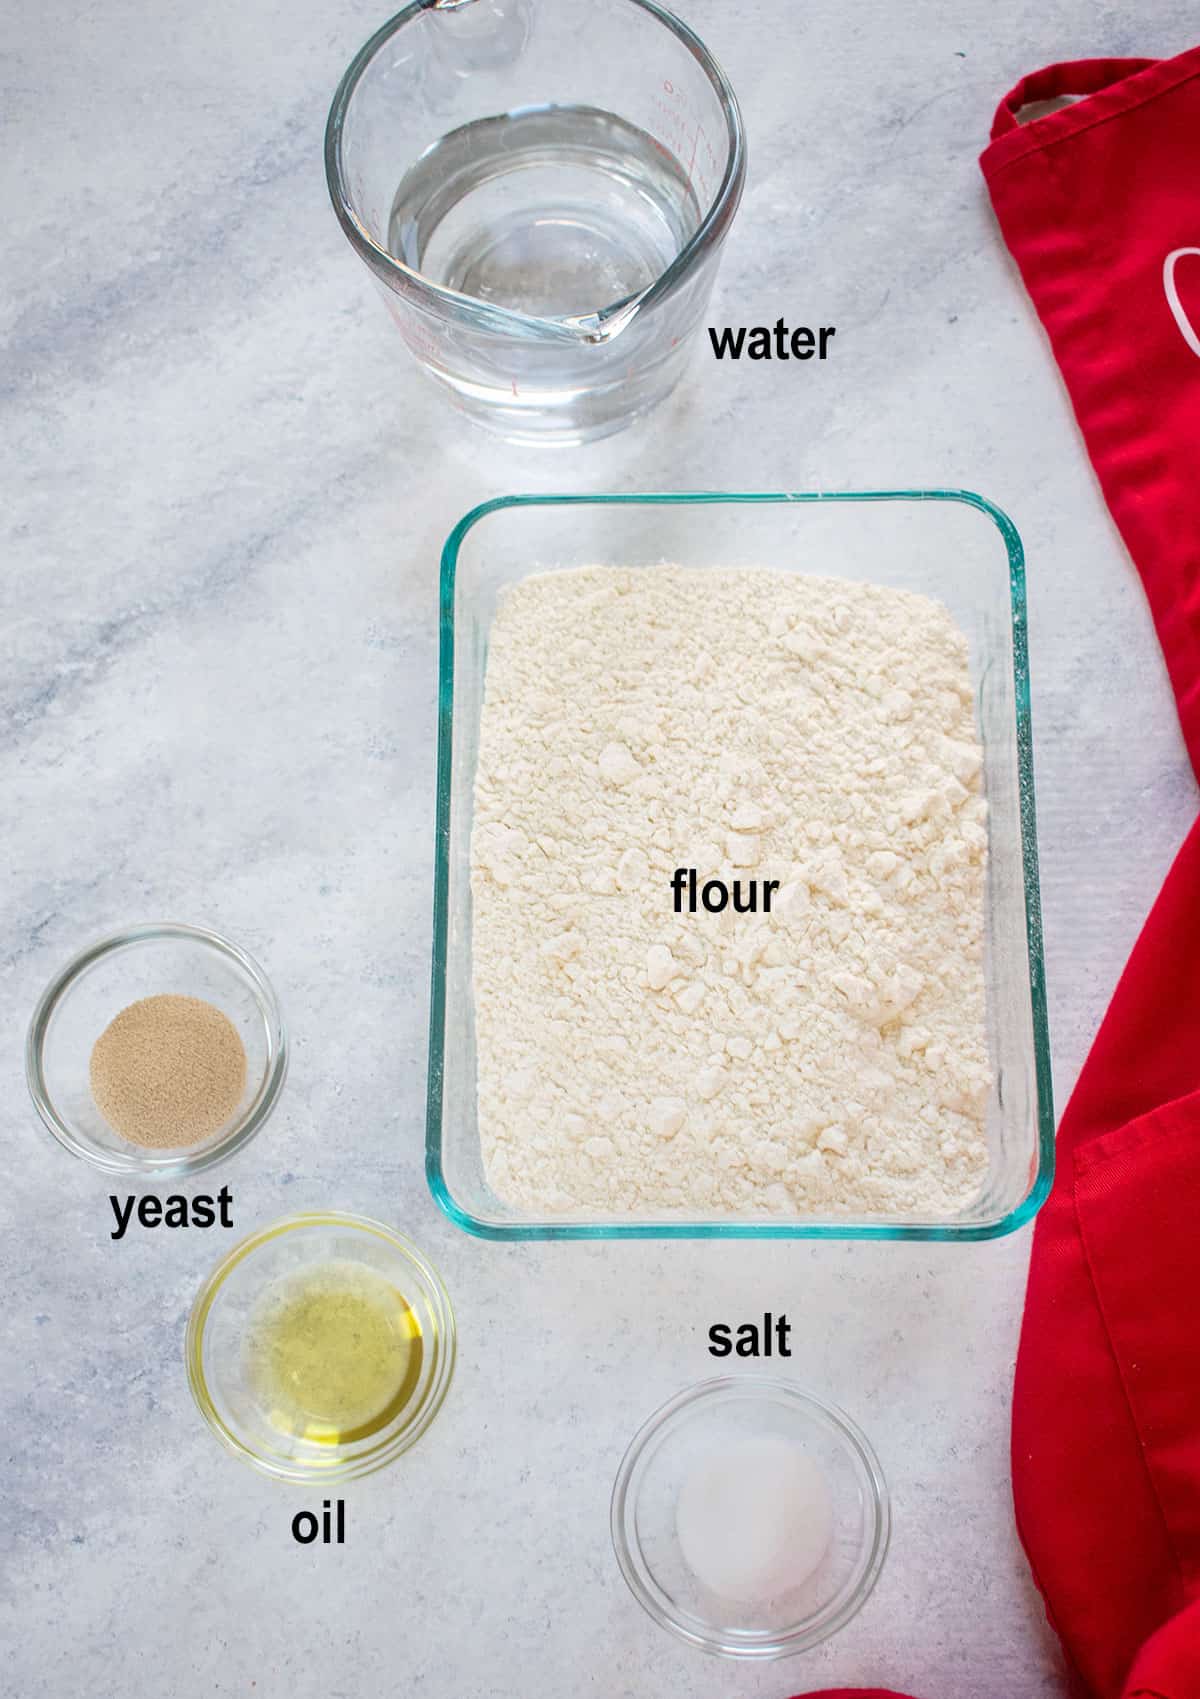 water, flour, yeast, oil, salt